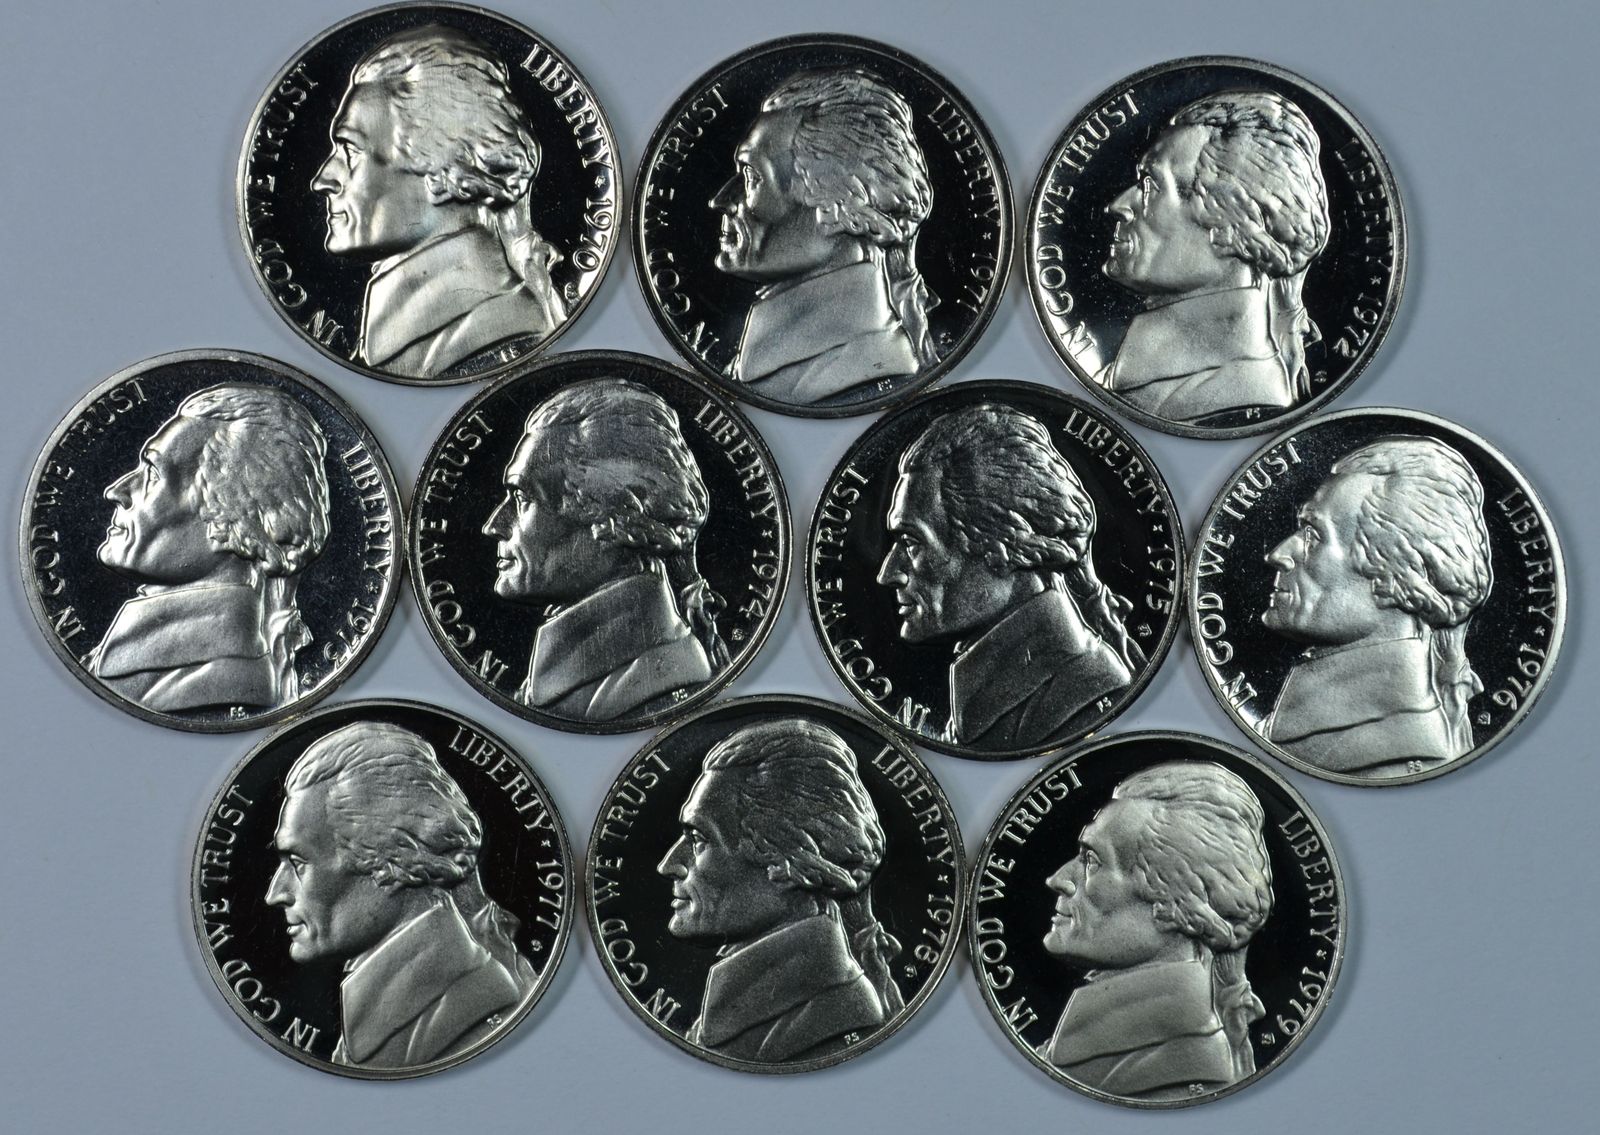 1970 - 1979 S Jefferson Proof nickel set - $15.00